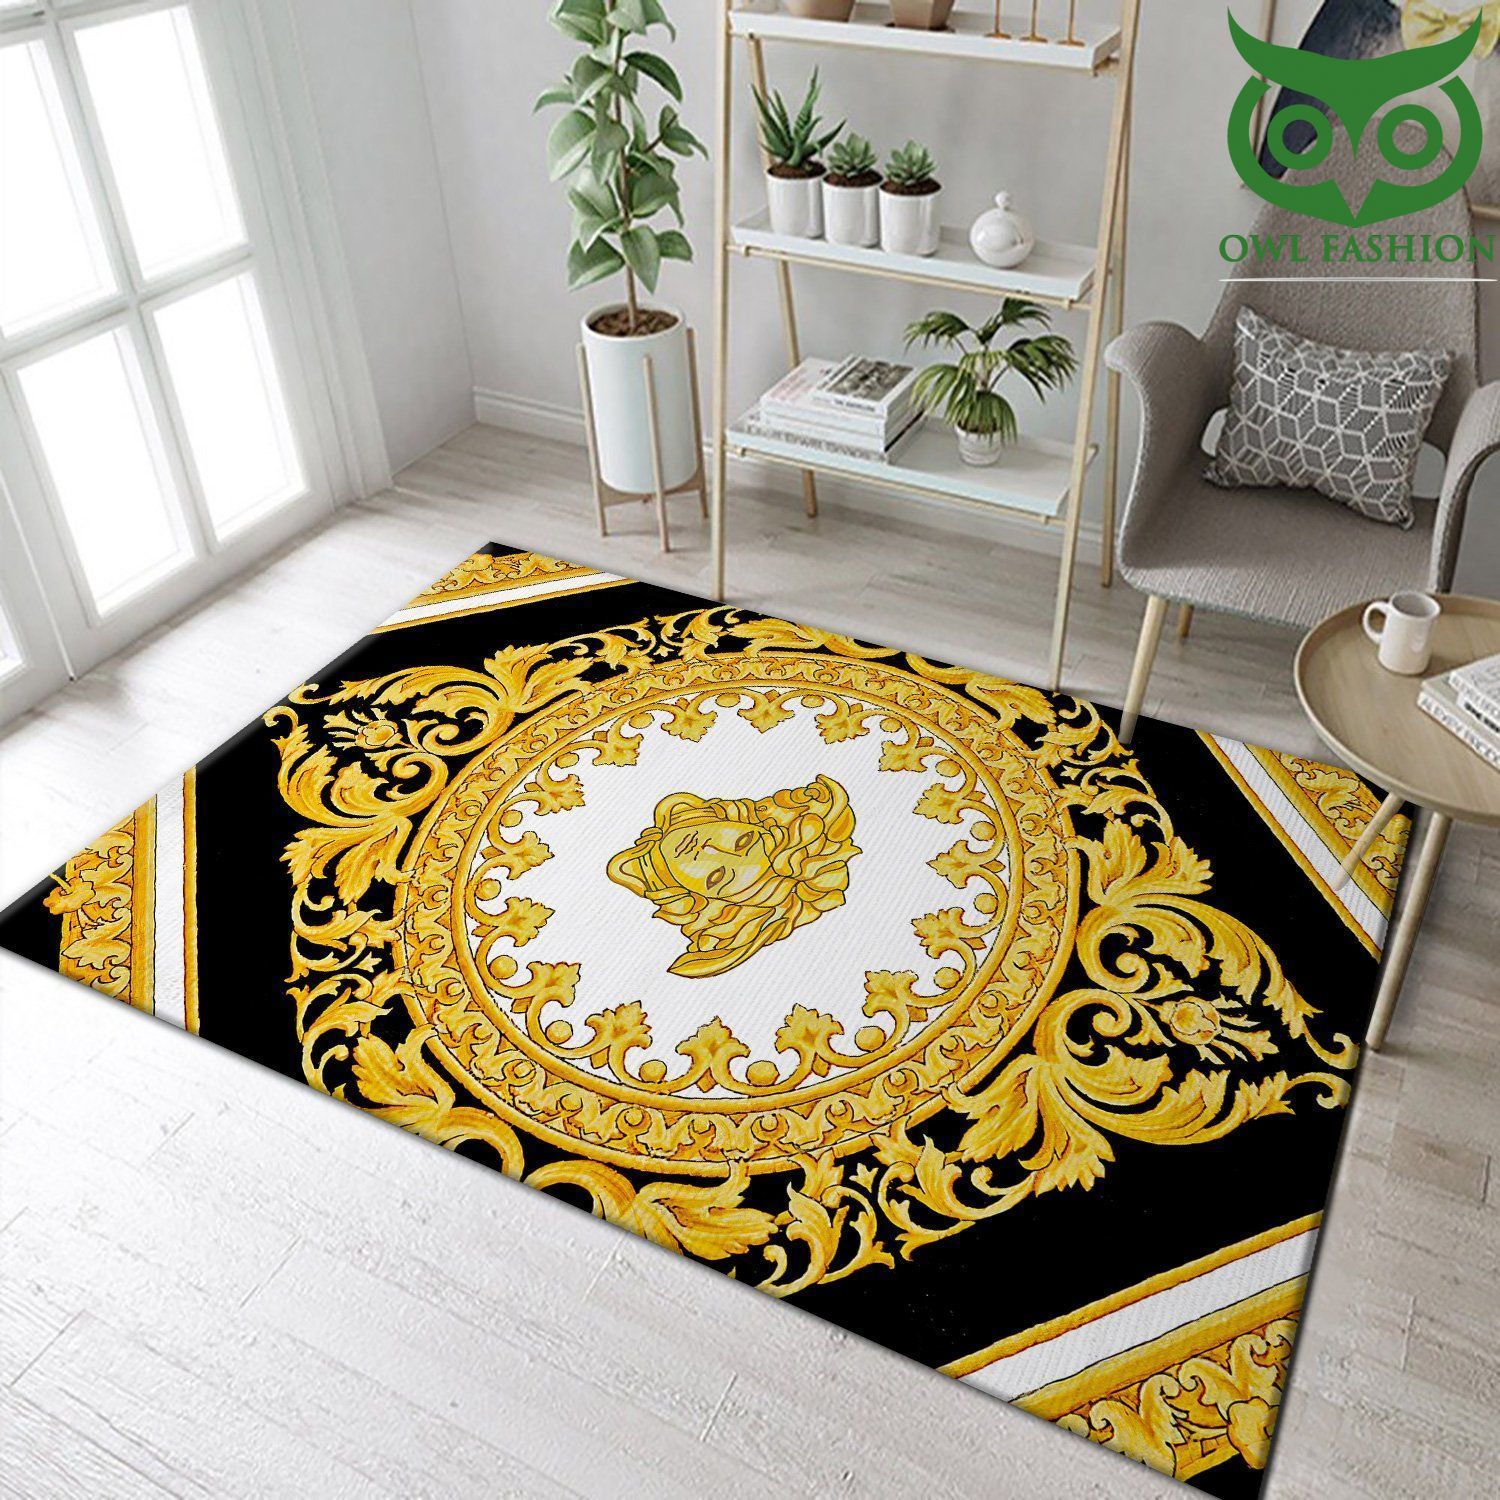 Versace Fashion Brand Logo Gold Area carpet rug Home and floor Decor